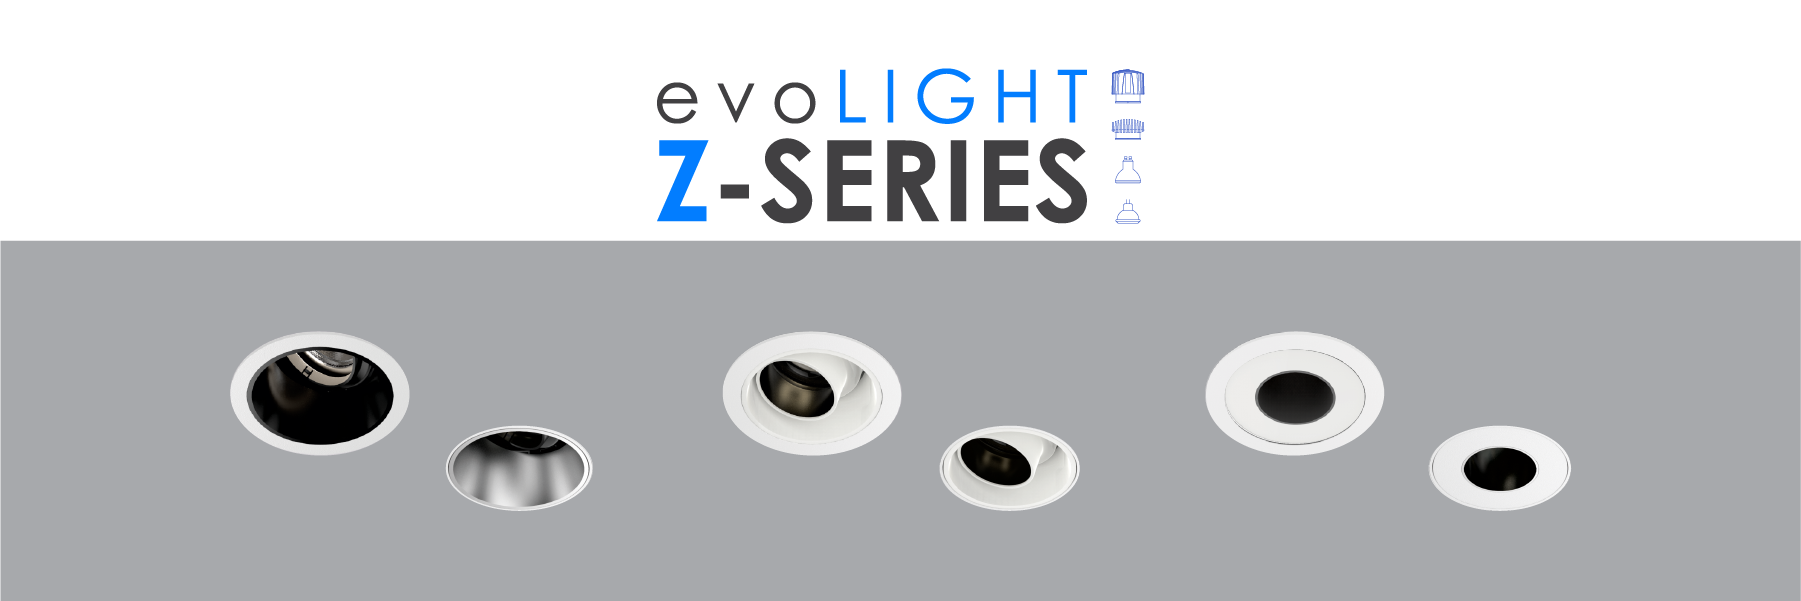 evoLIGHT Z-Series